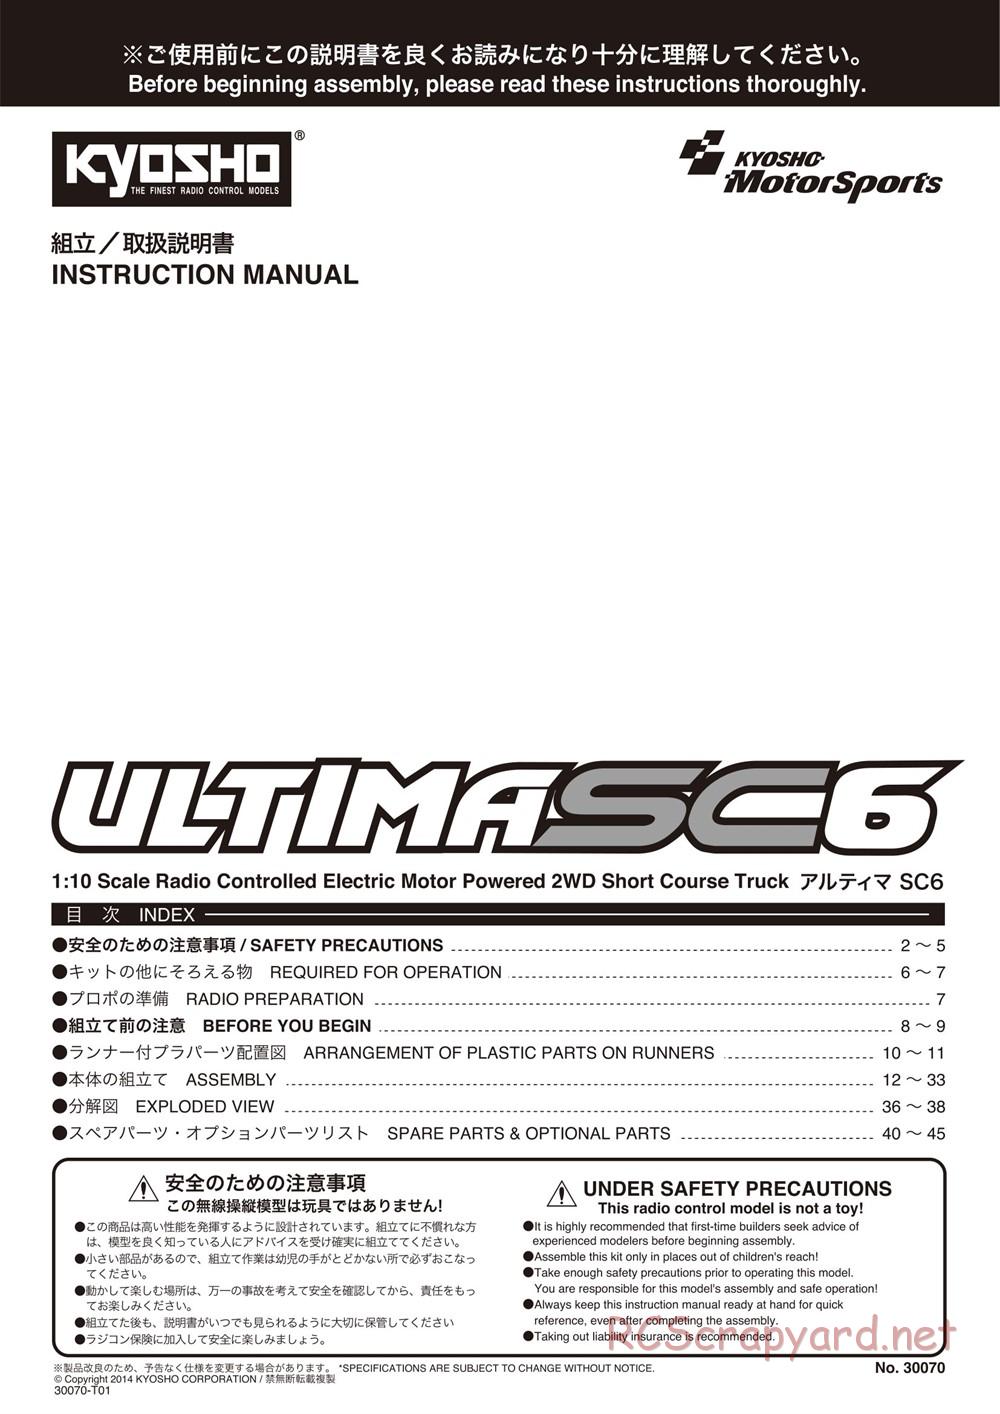 Kyosho - Ultima SC6 - Manual - Page 1